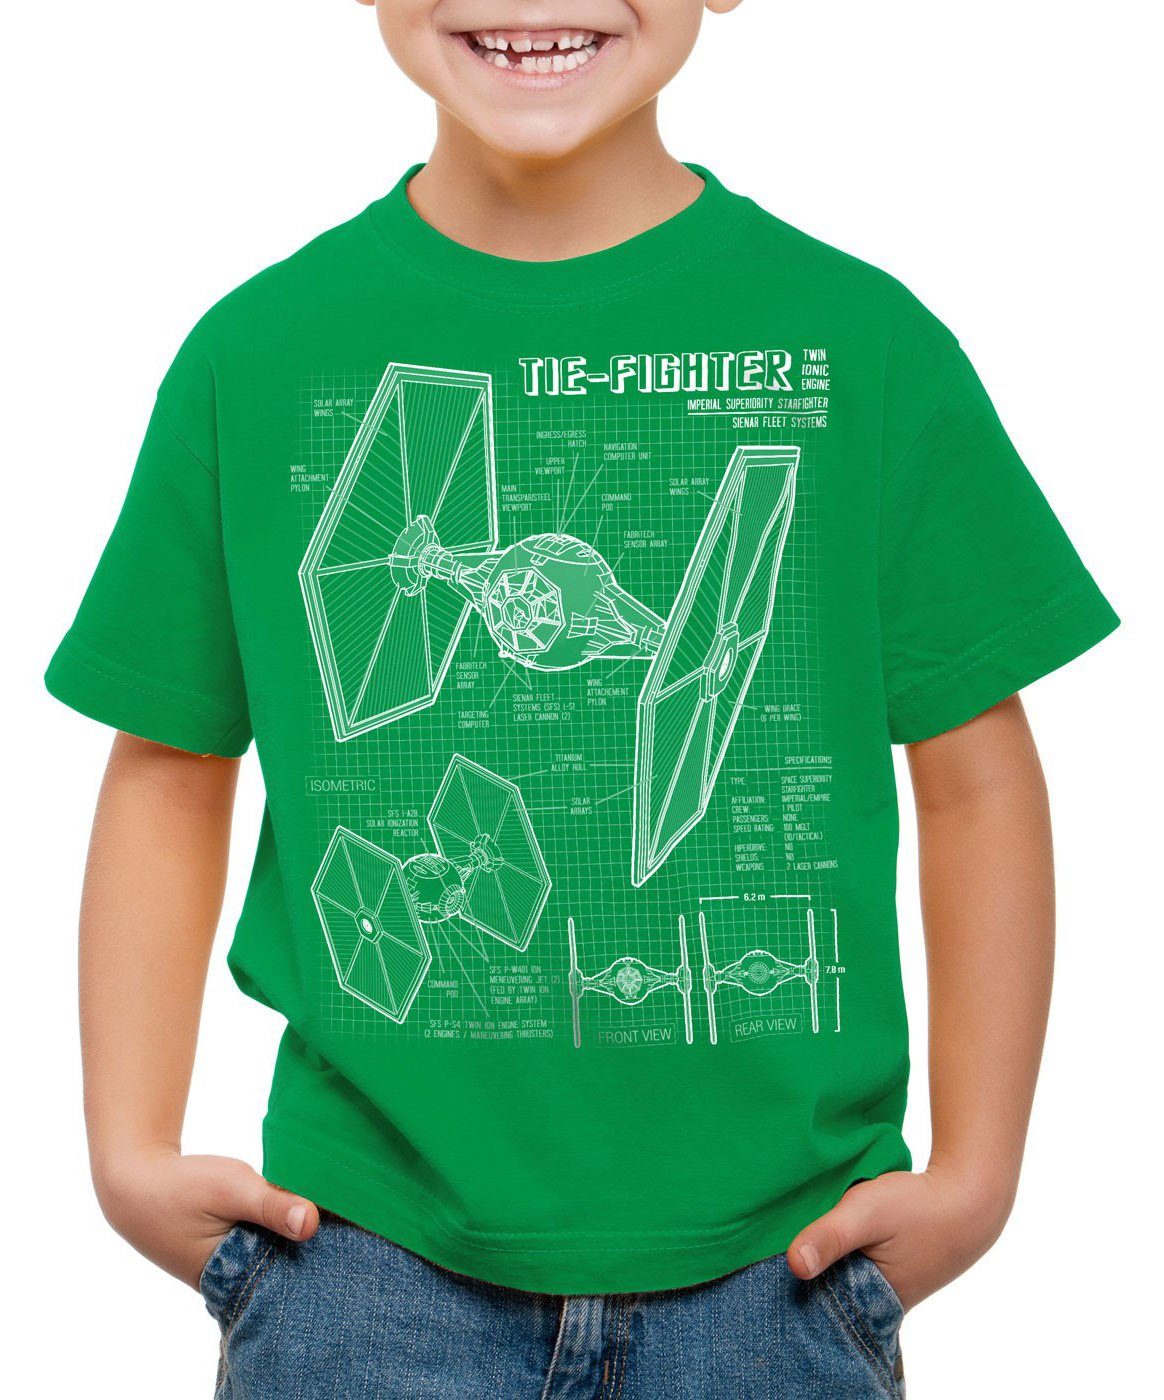 Print-Shirt fighter T-Shirt blaupause grün Jäger T-Shirt TIE Kinder style3